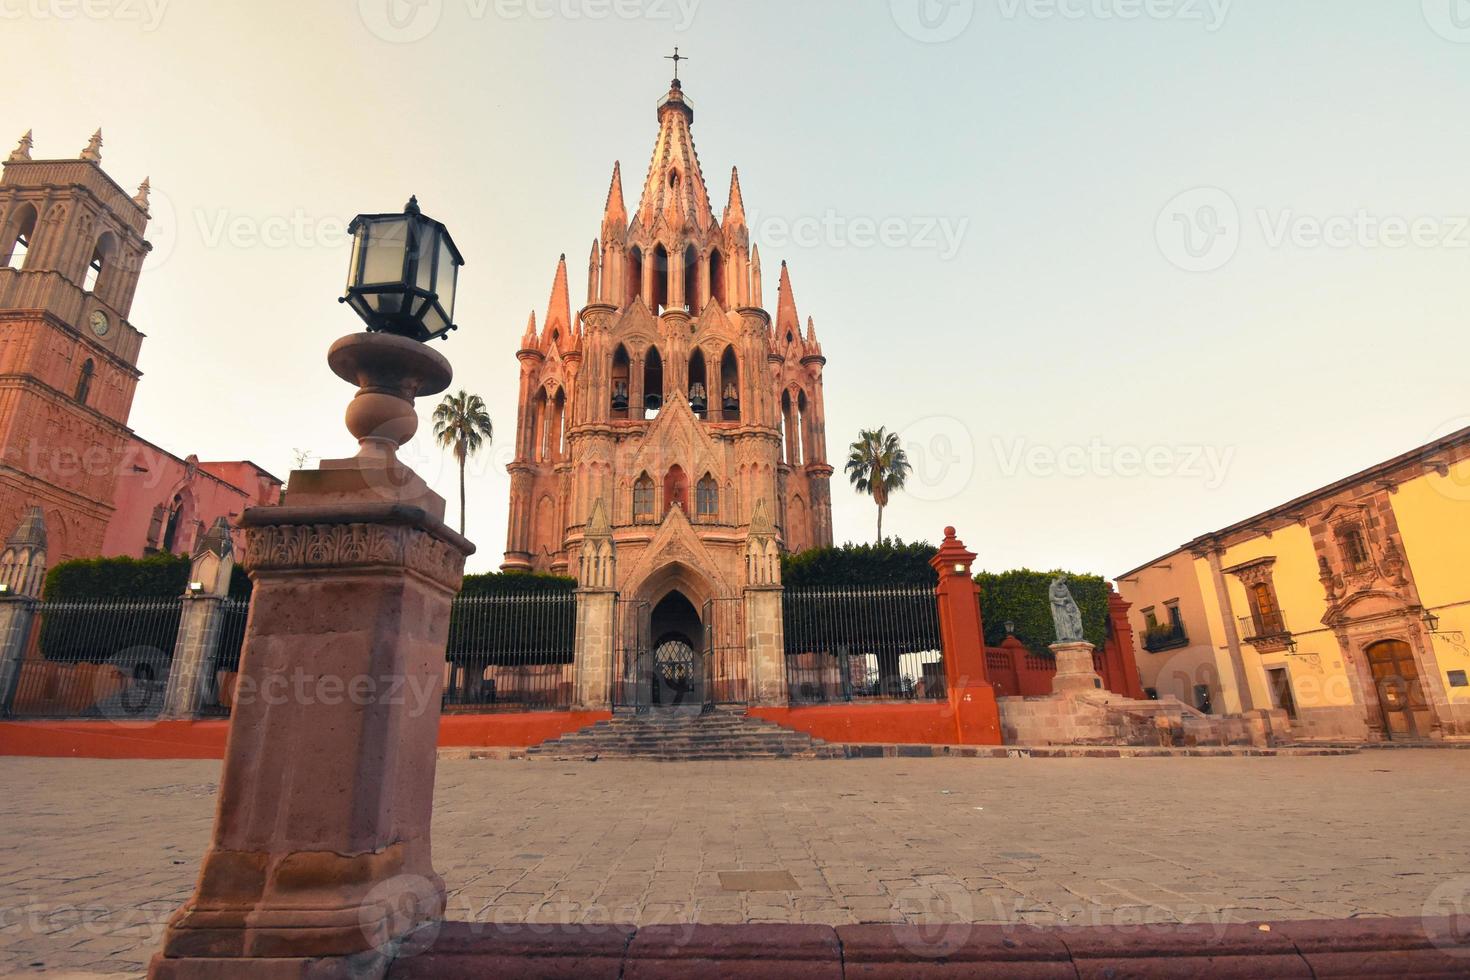 parroquia erzengelkirche jardin stadtplatz rafael kirche san miguel de allende, mexiko. Parroaguia im 17. Jahrhundert geschaffen foto